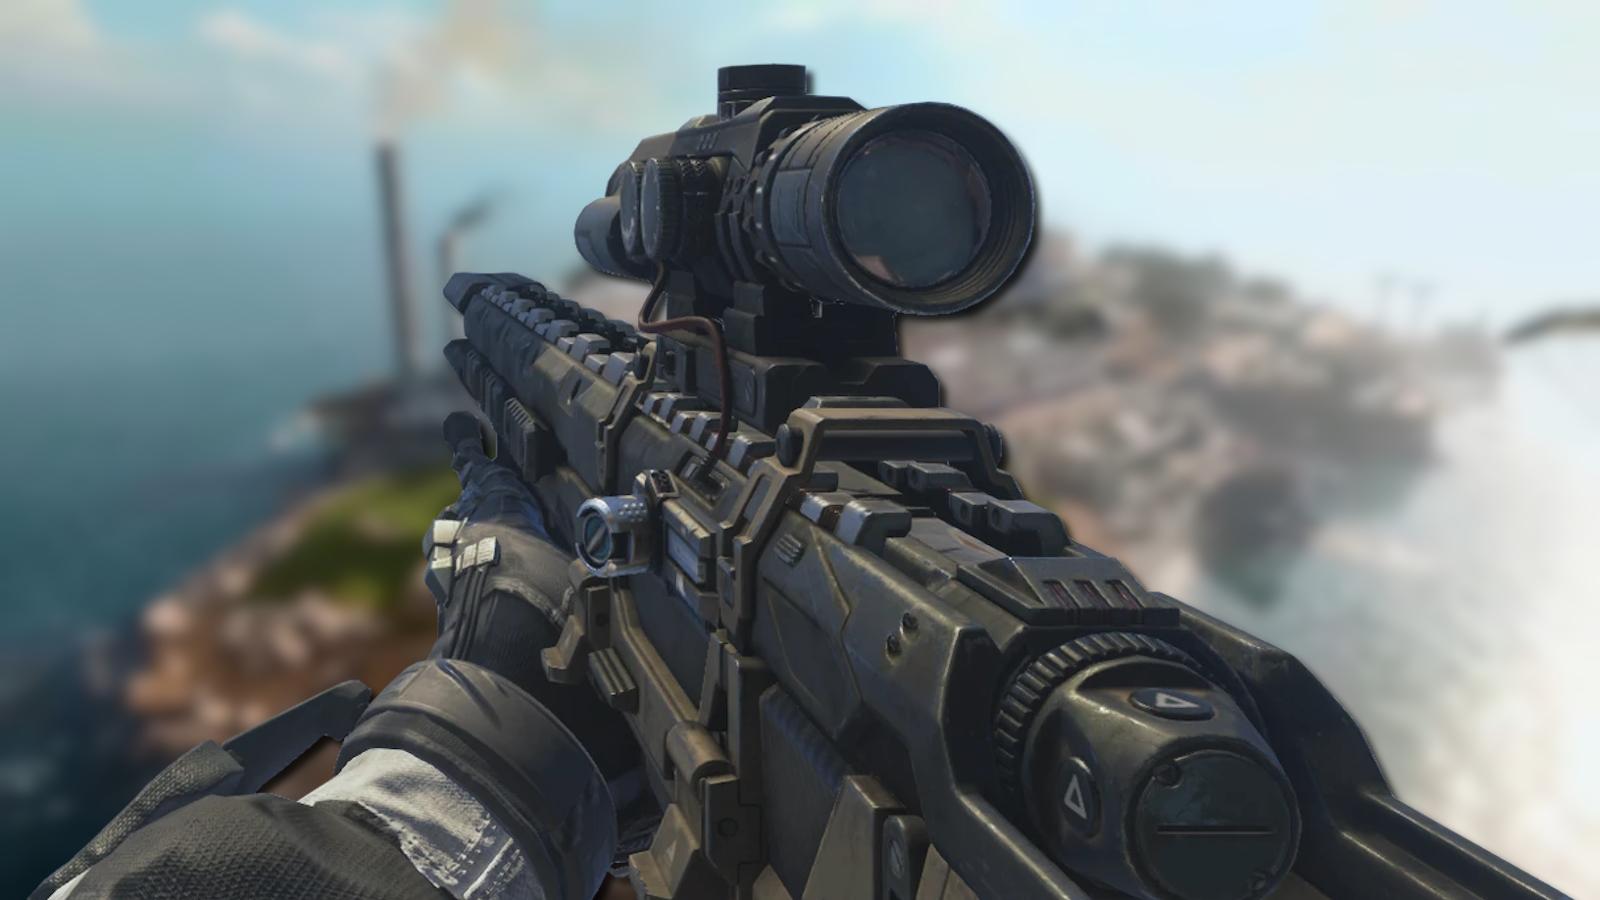 MORS sniper rifle from Call of Duty: Advanced Warfare on Rebirth Island.